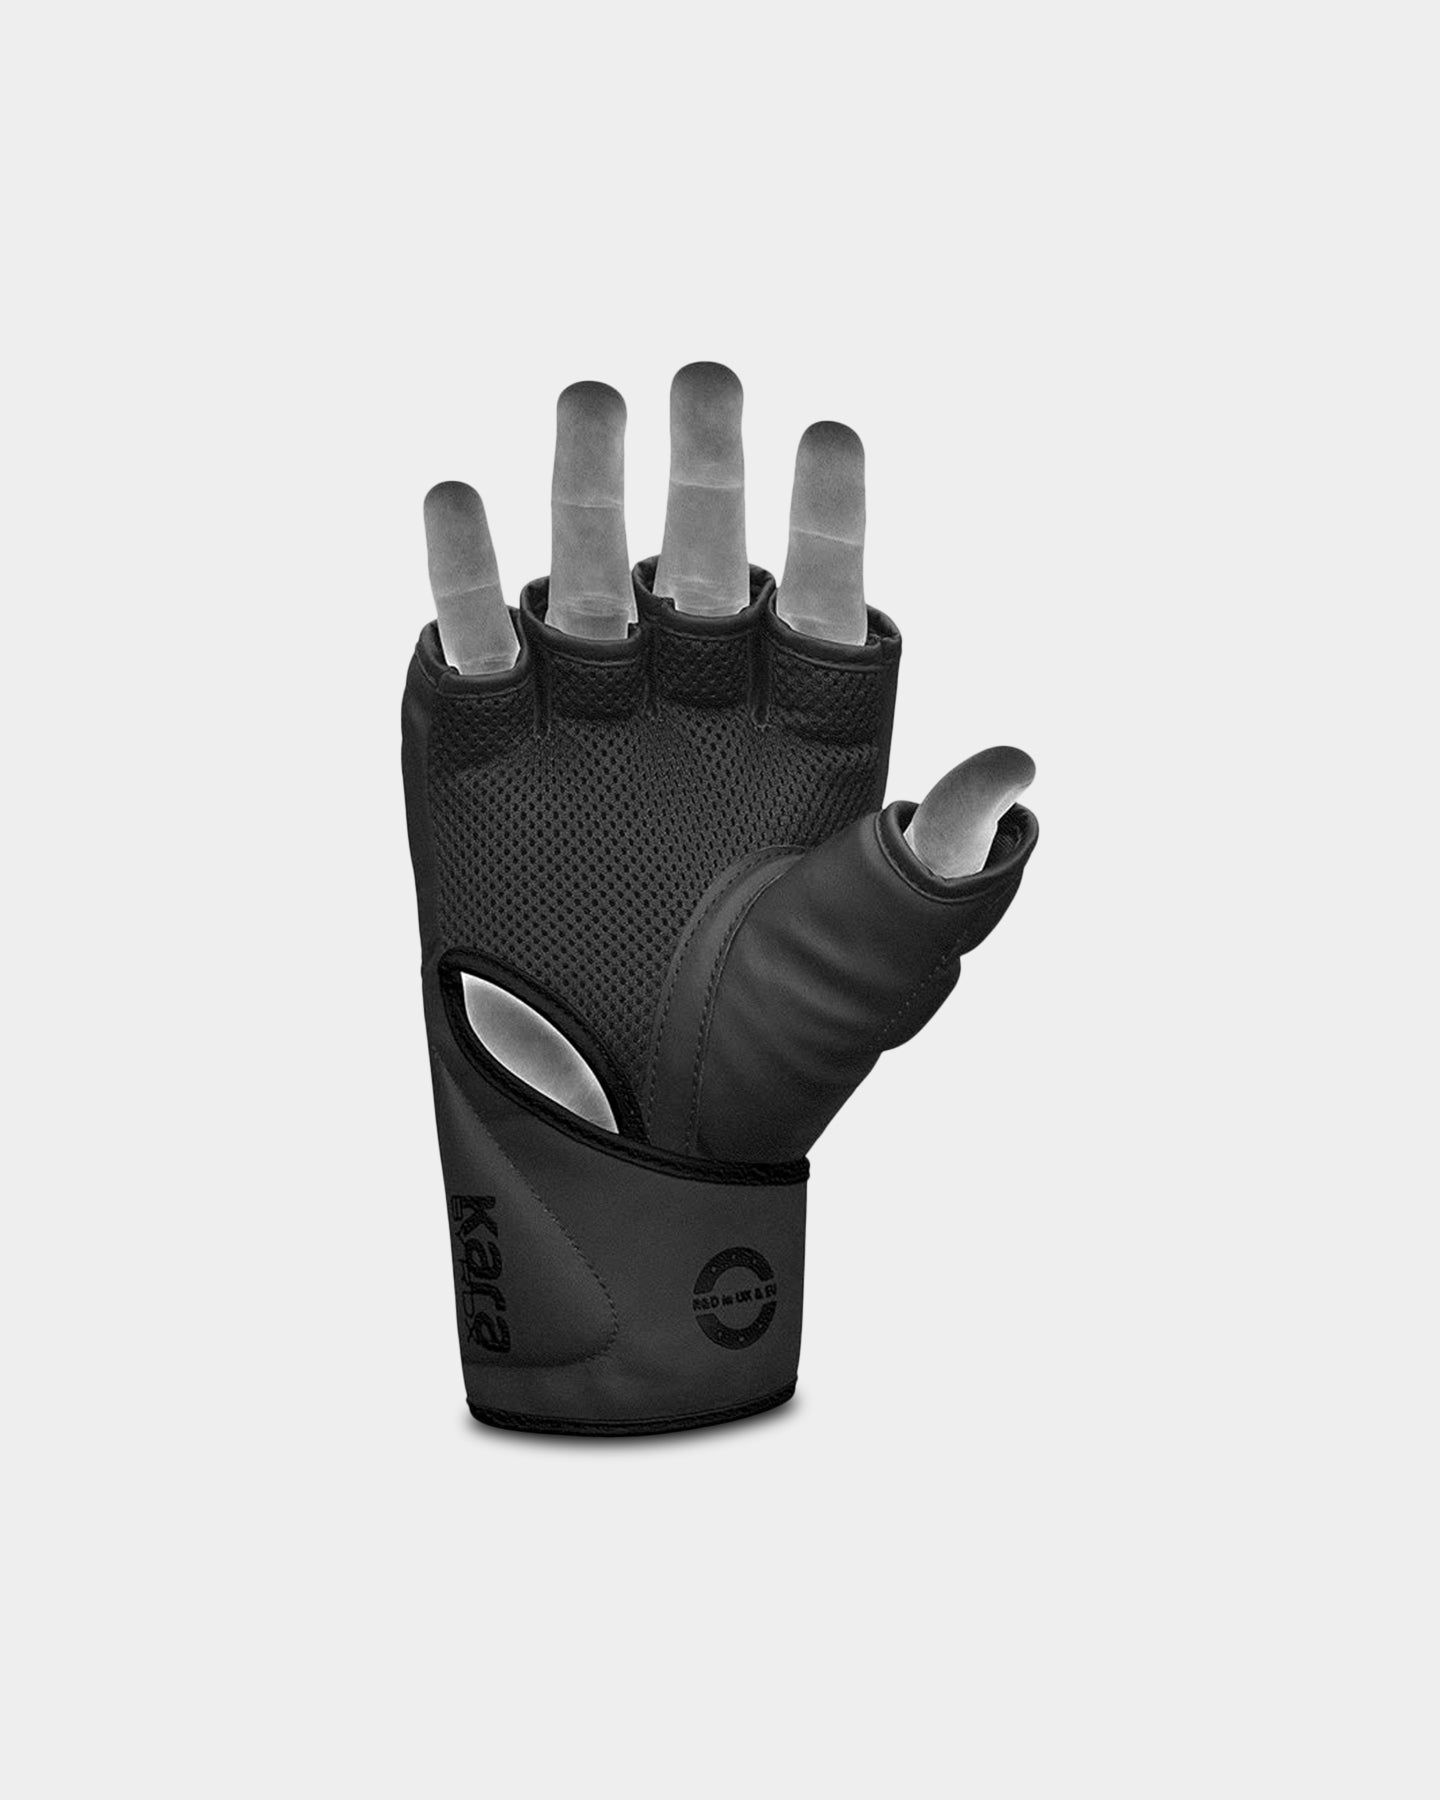 RDX Sports Grappling Gloves F6, S, Black A4